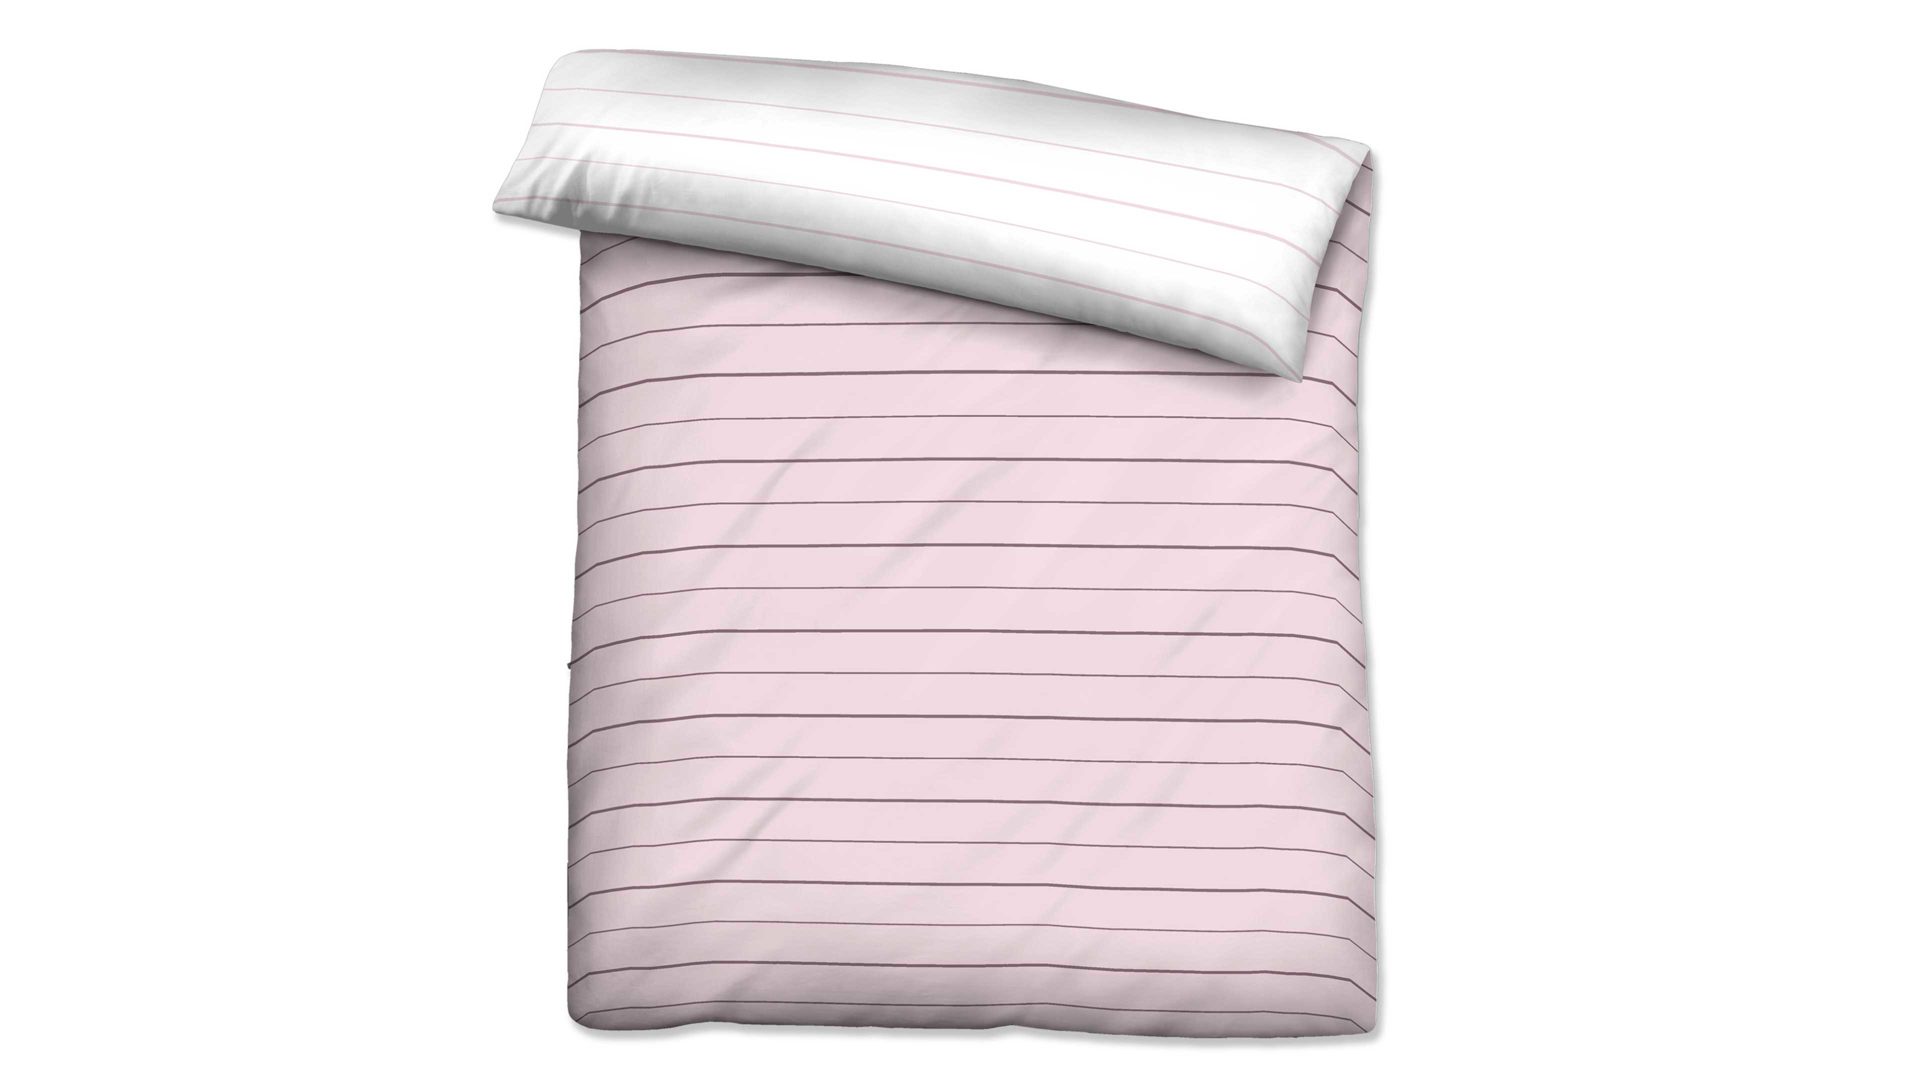 Bettbezug Biberna aus Stoff in Pastell biberna Mako-Satin Bettdeckenbezug Streifen Mix & Match rosefarbene & sturmgraue Streifen – ca. 135 x 200 cm